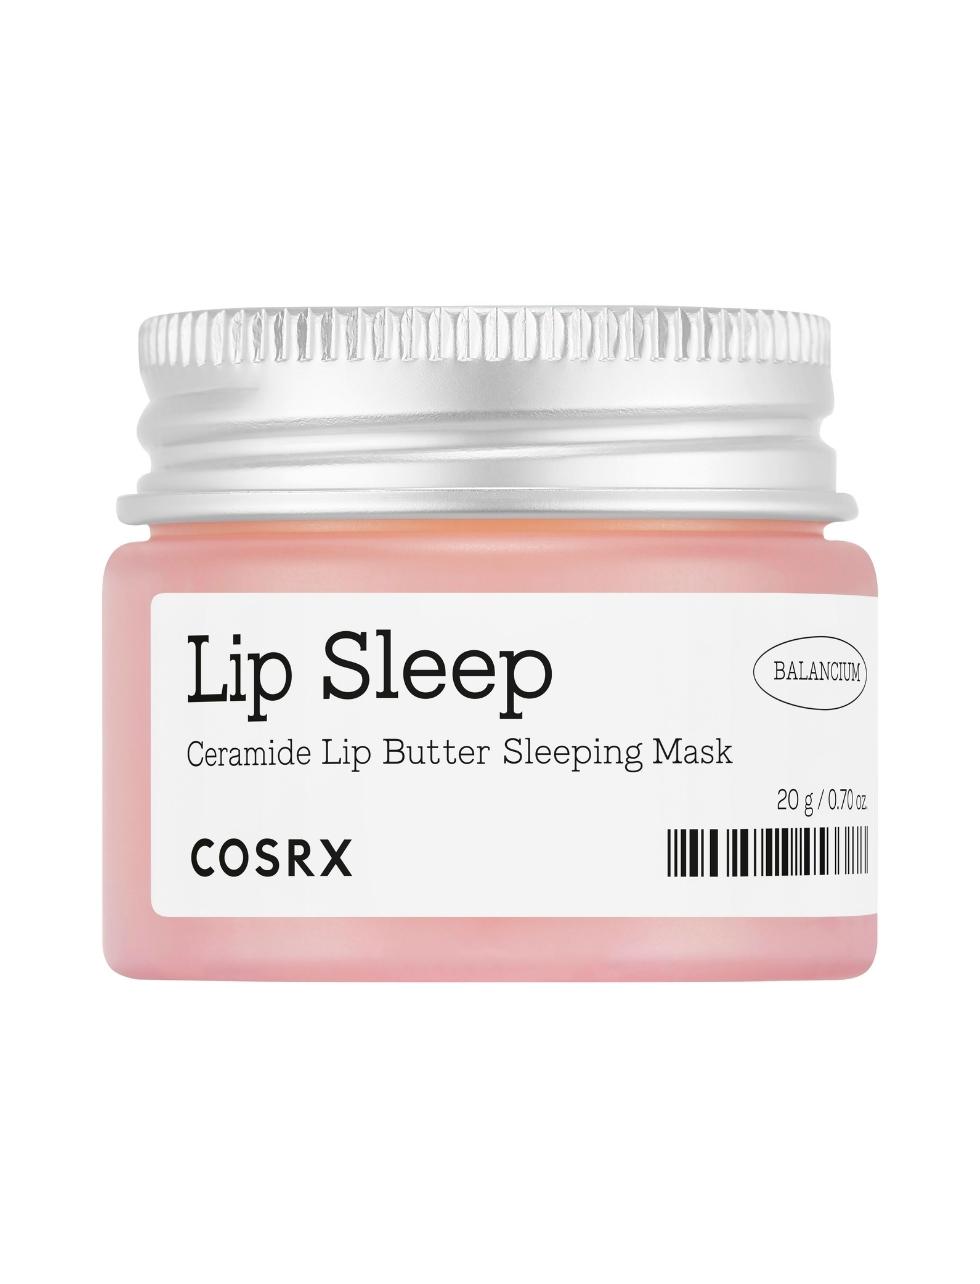 Cosrx Lip Sleep Ceramide Lip Butter Sleeping Mask.